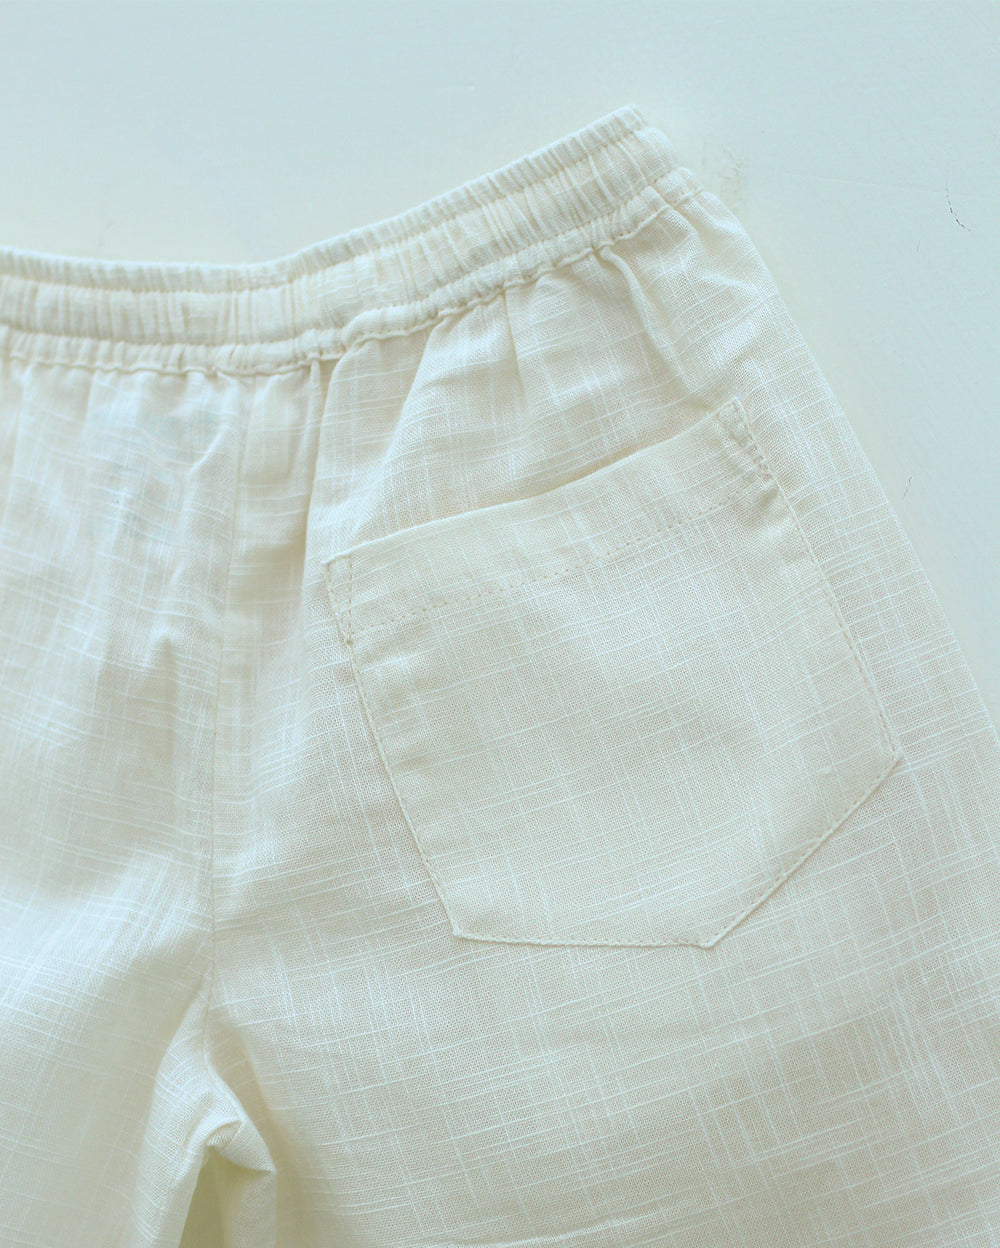 Marshmallo Summer Shorts Eartyhtweens